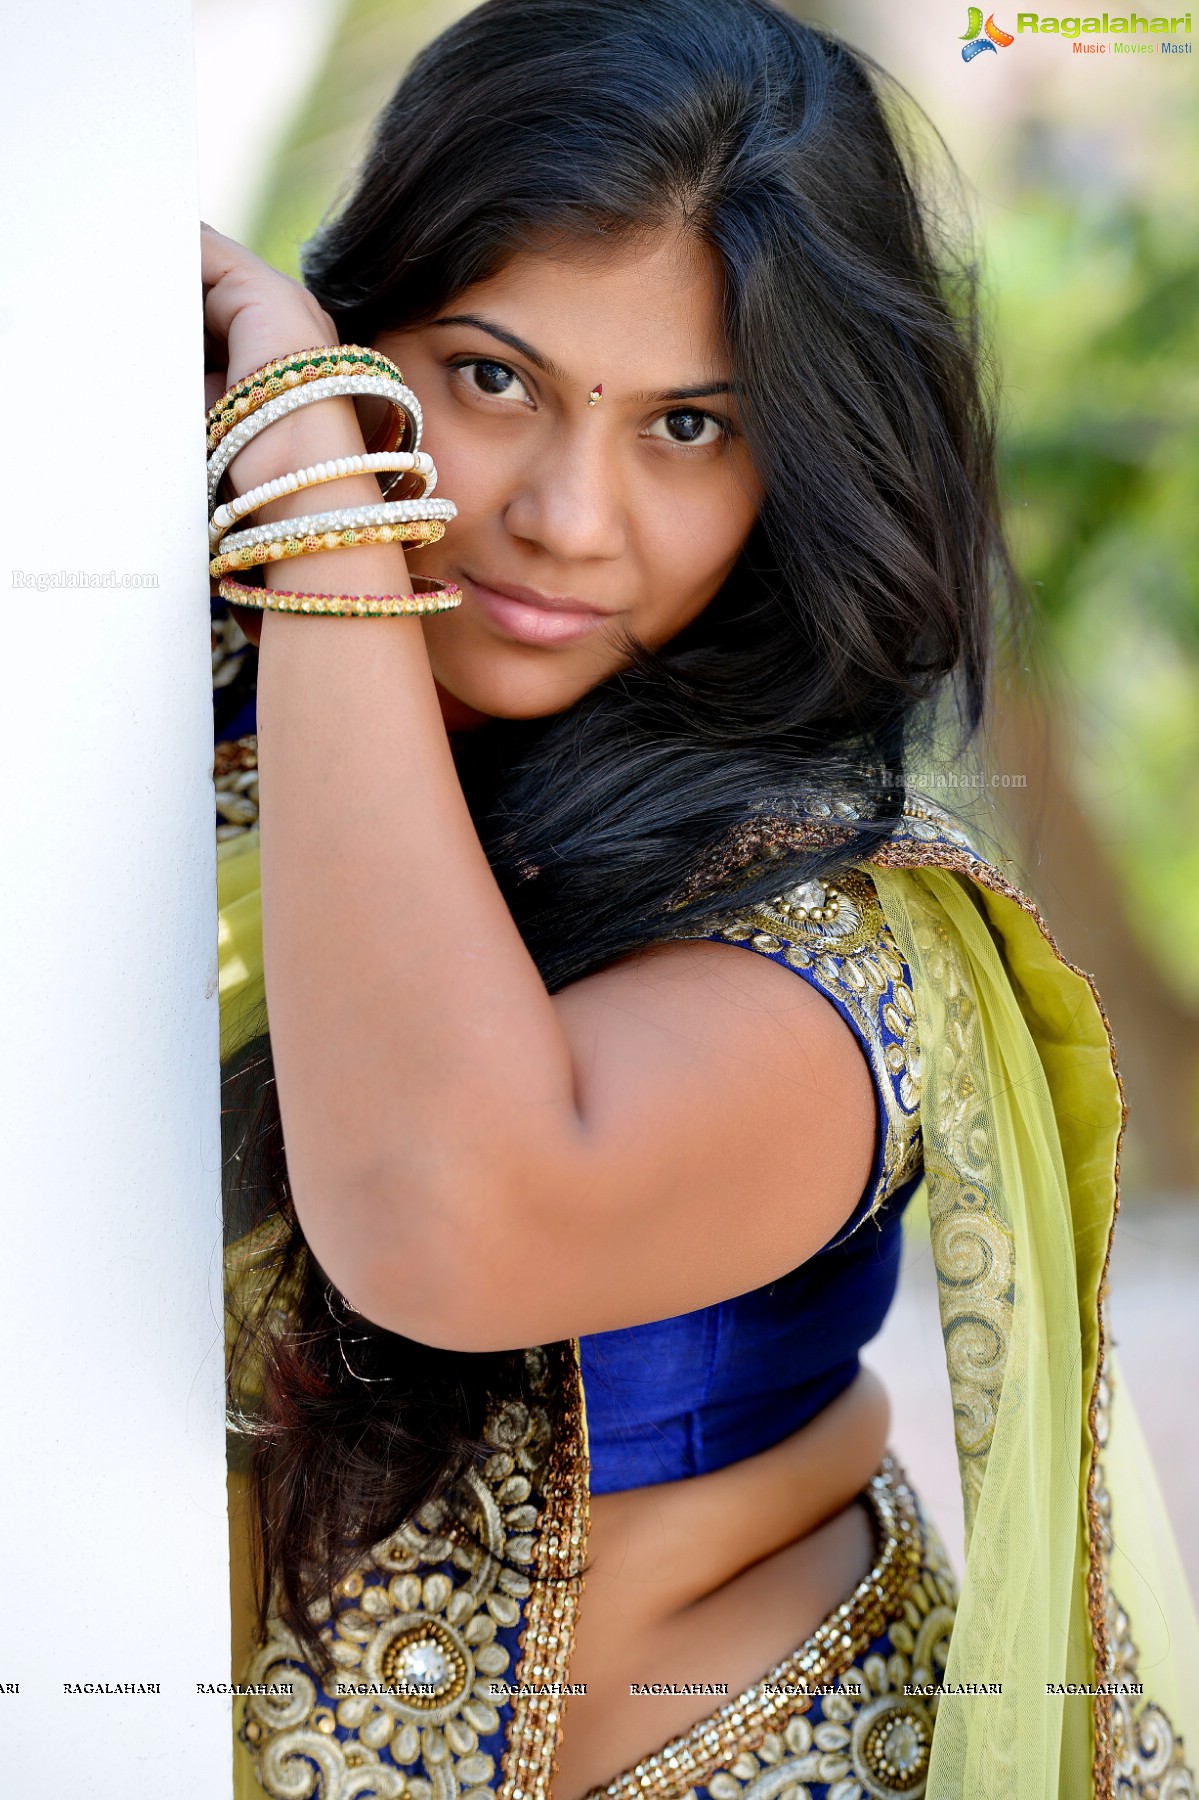 Swetha Image 4 | Telugu Cinema heroines Photos Gallery,Stills ...